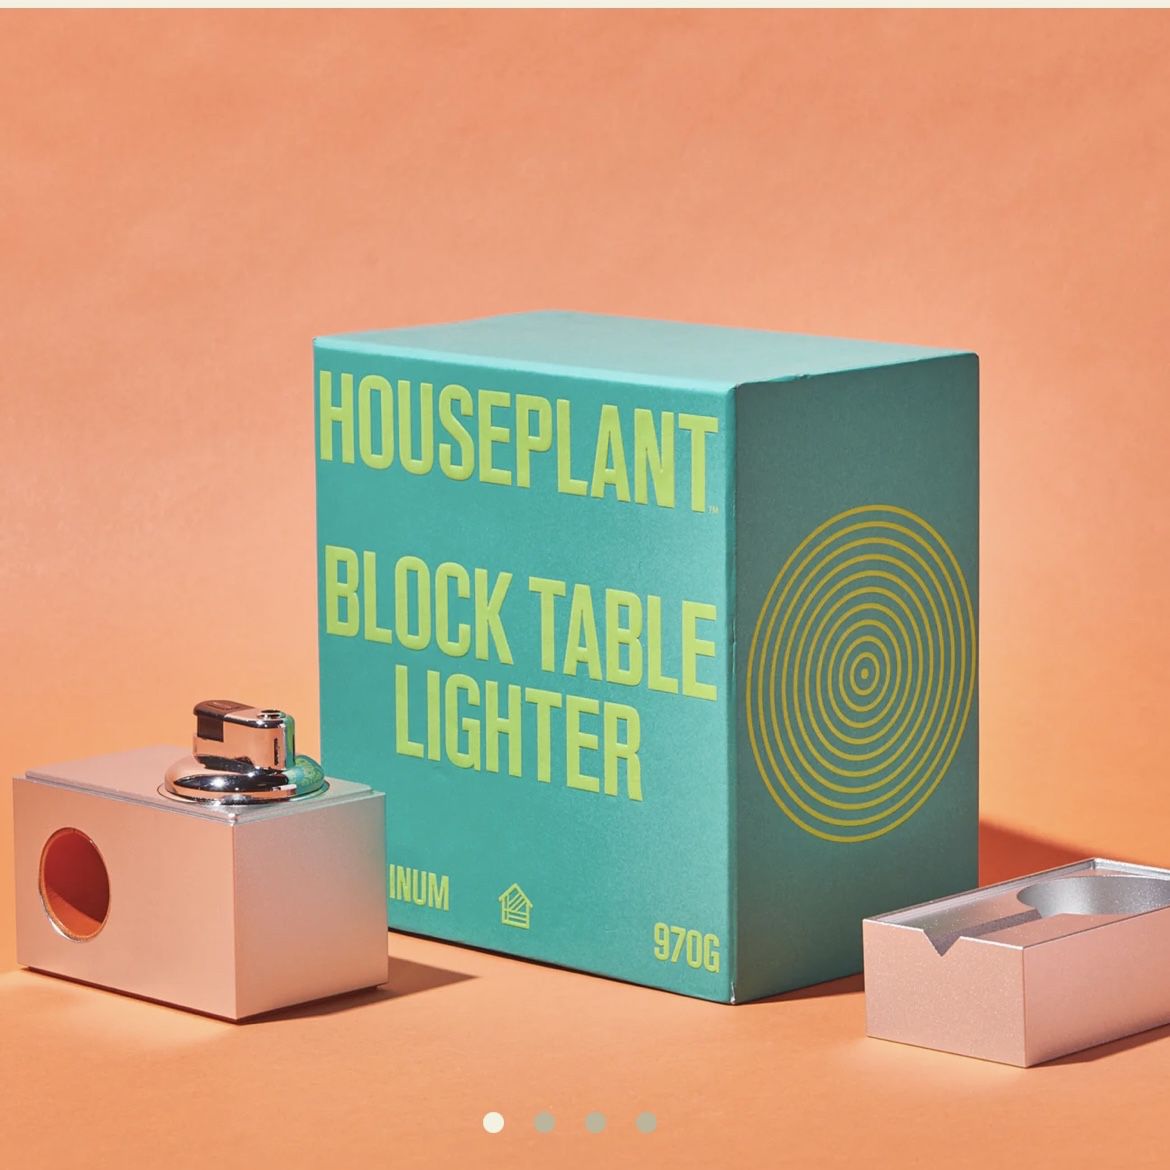 Block Table Lighter